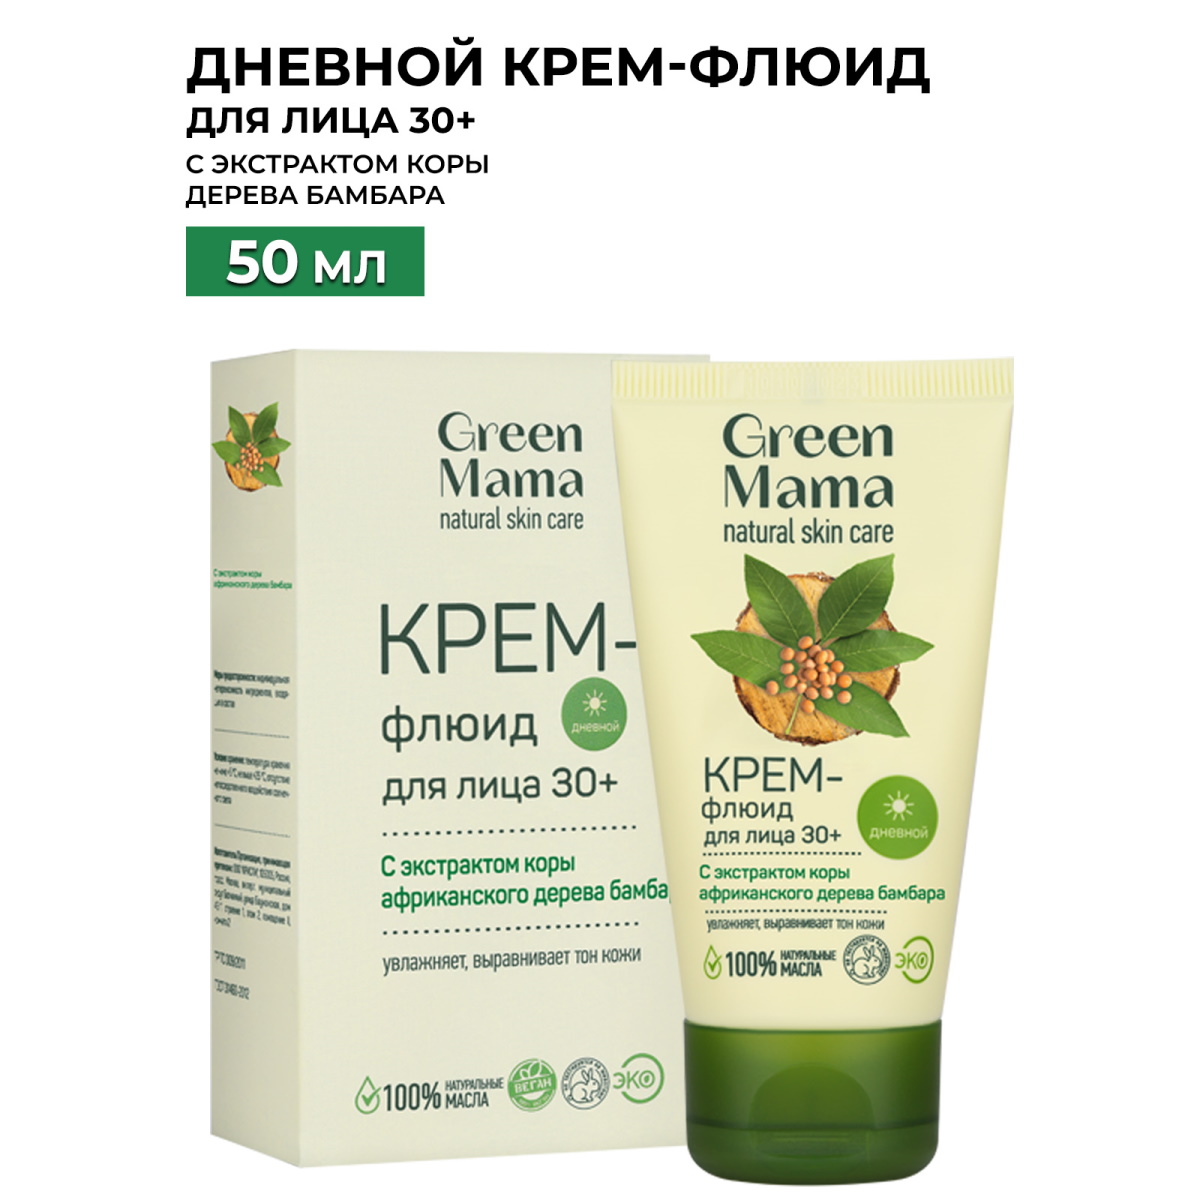 Green Mama, Дневной крем-флюид для лица 30+, 50 мл vetiver root green tea cedarwood